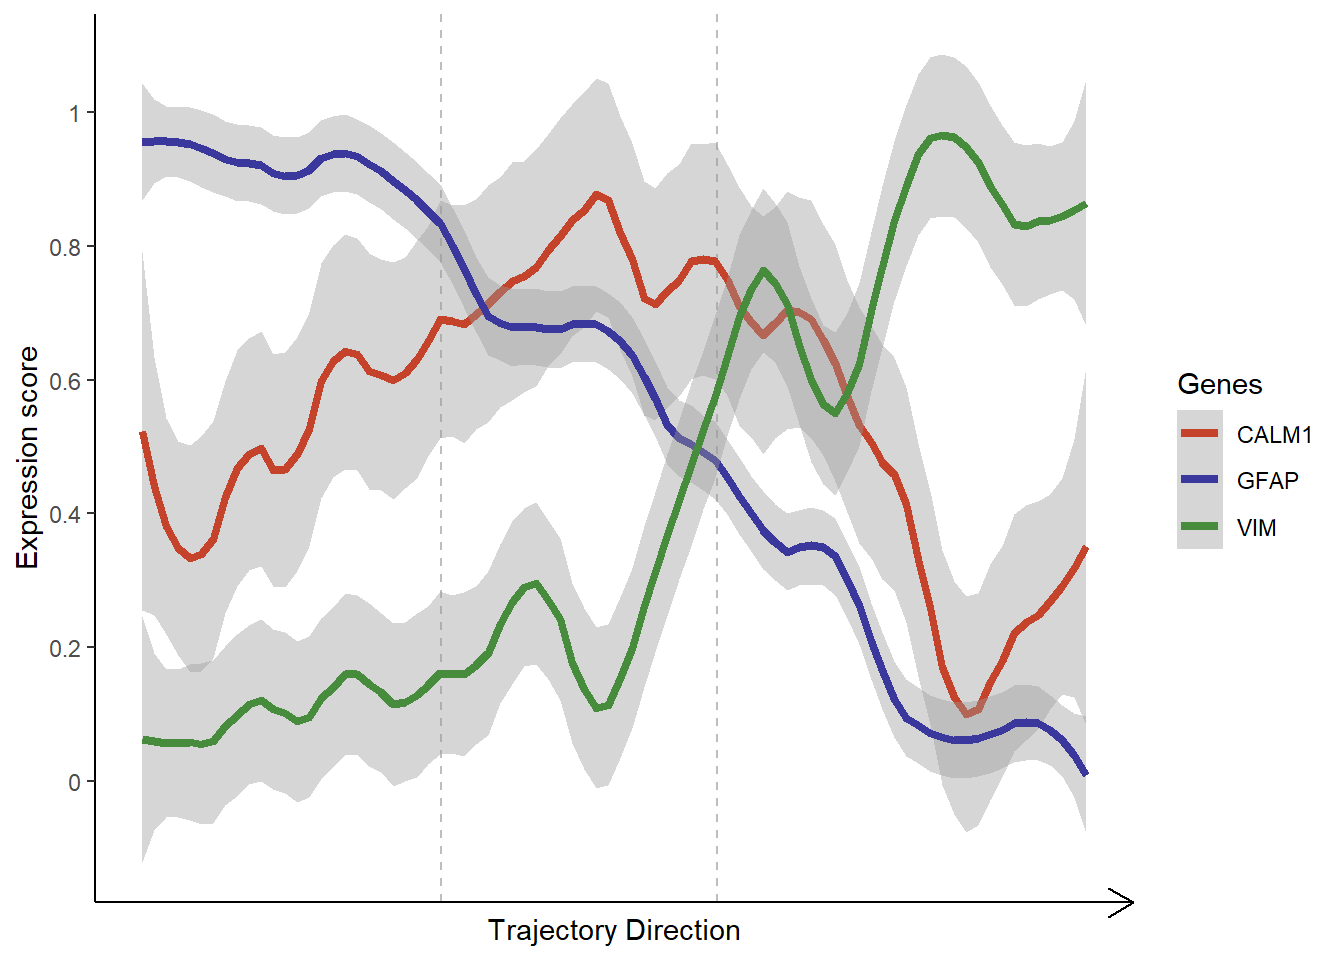 Figure 3.3. Visualization of gene expression along a trajectory